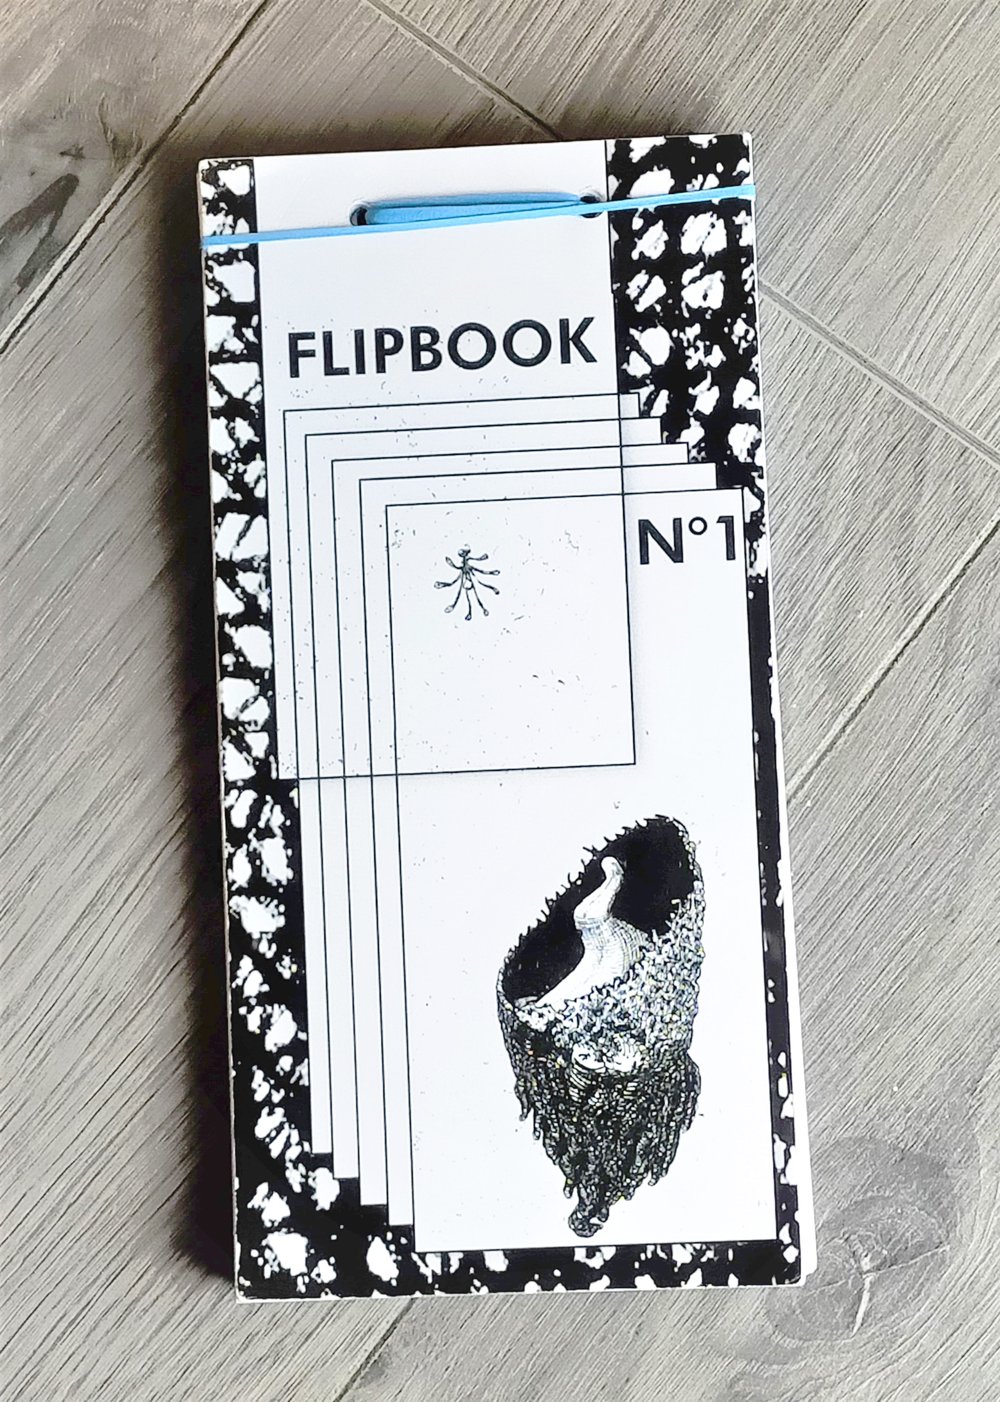 Flipbook 1